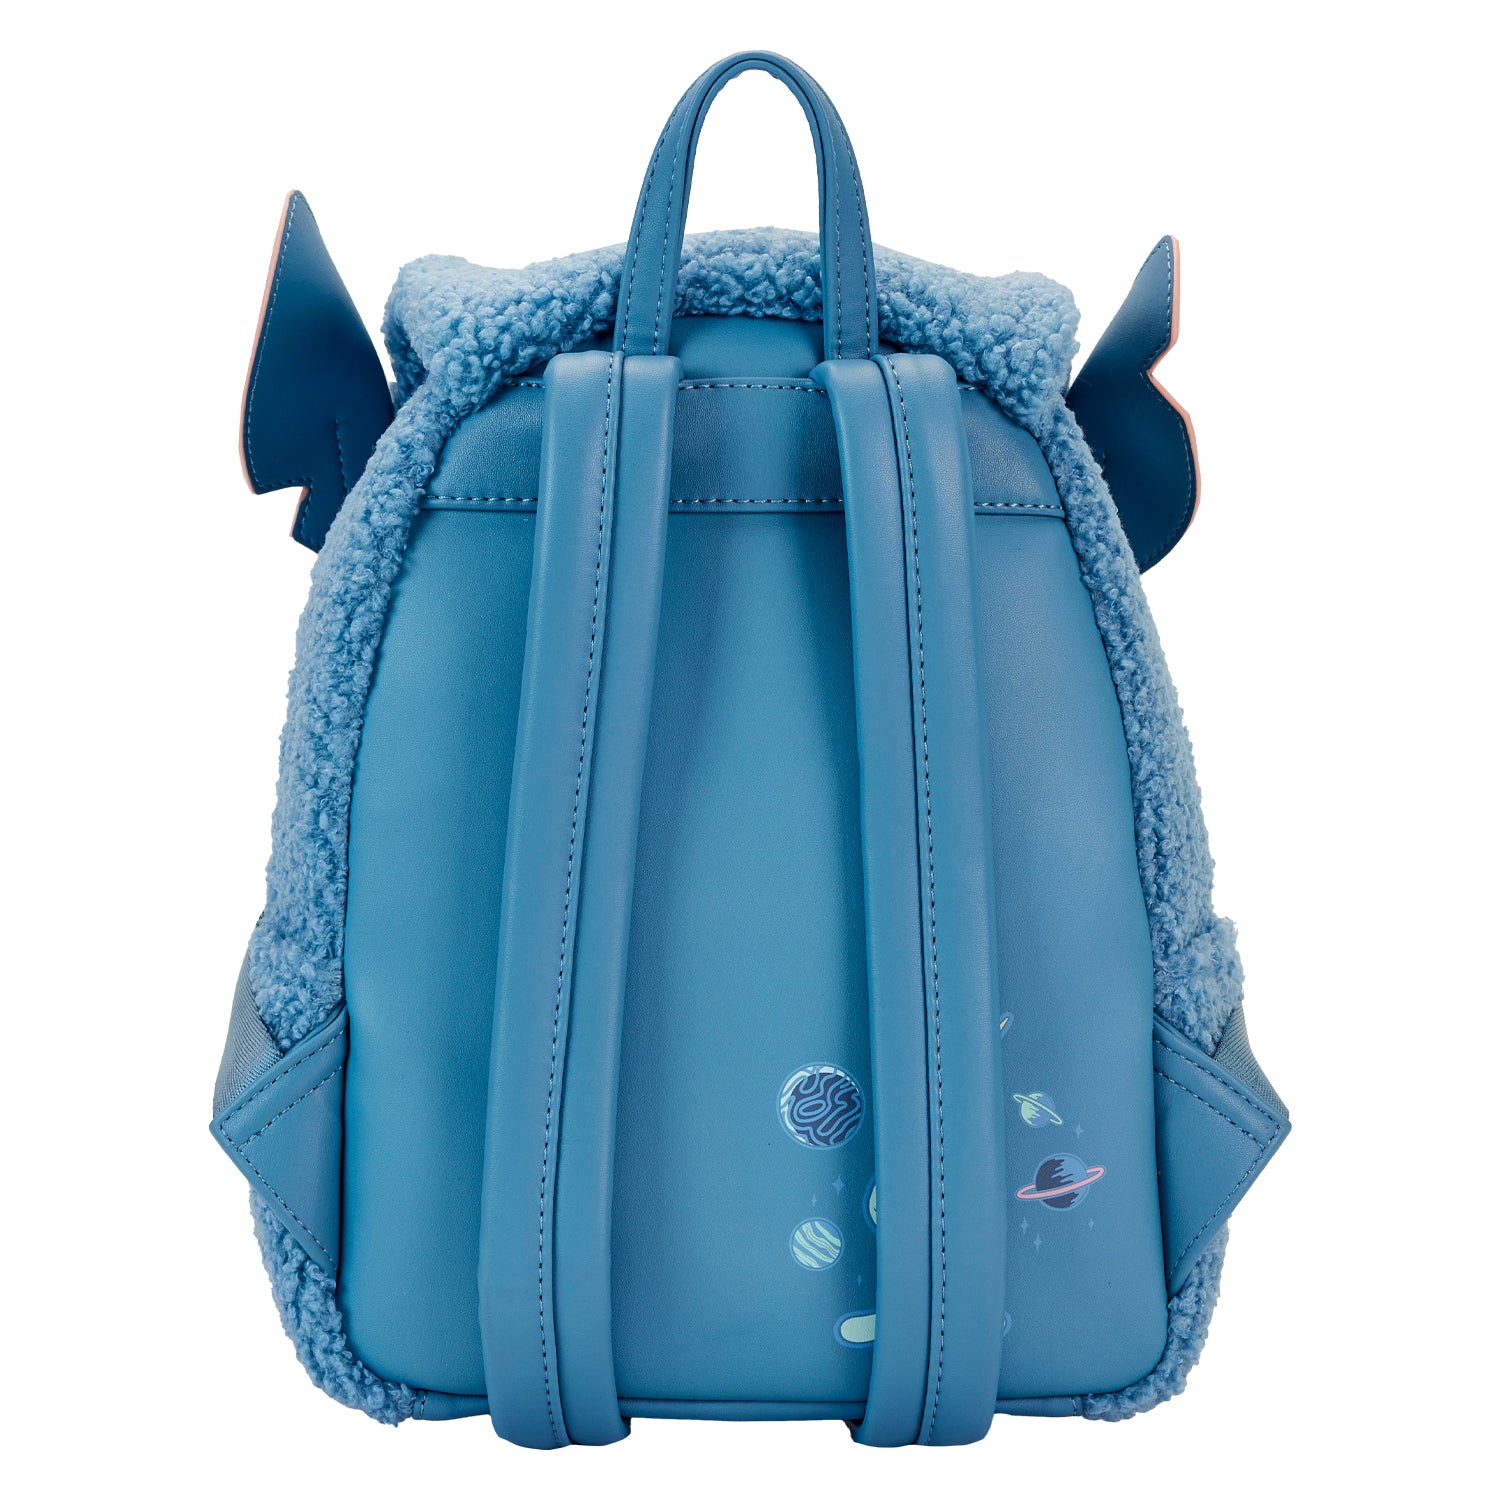 Disney | Stitch Plush Pocket Mini Backpack